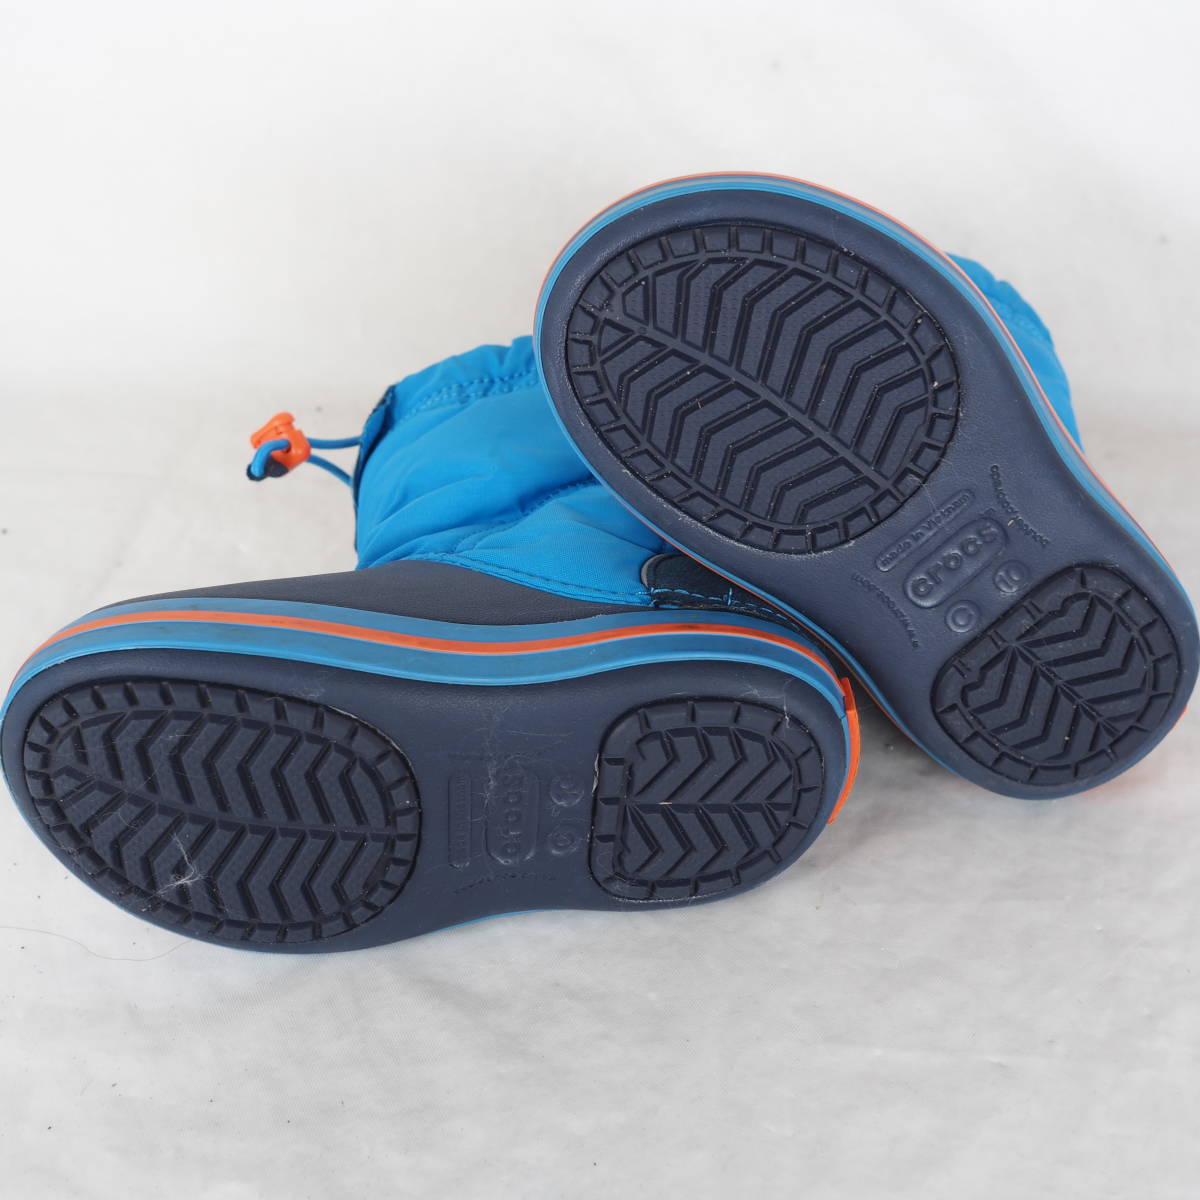 EB4739*crocs* Crocs * Kids snow boots *C10-17.5cm* navy * blue 